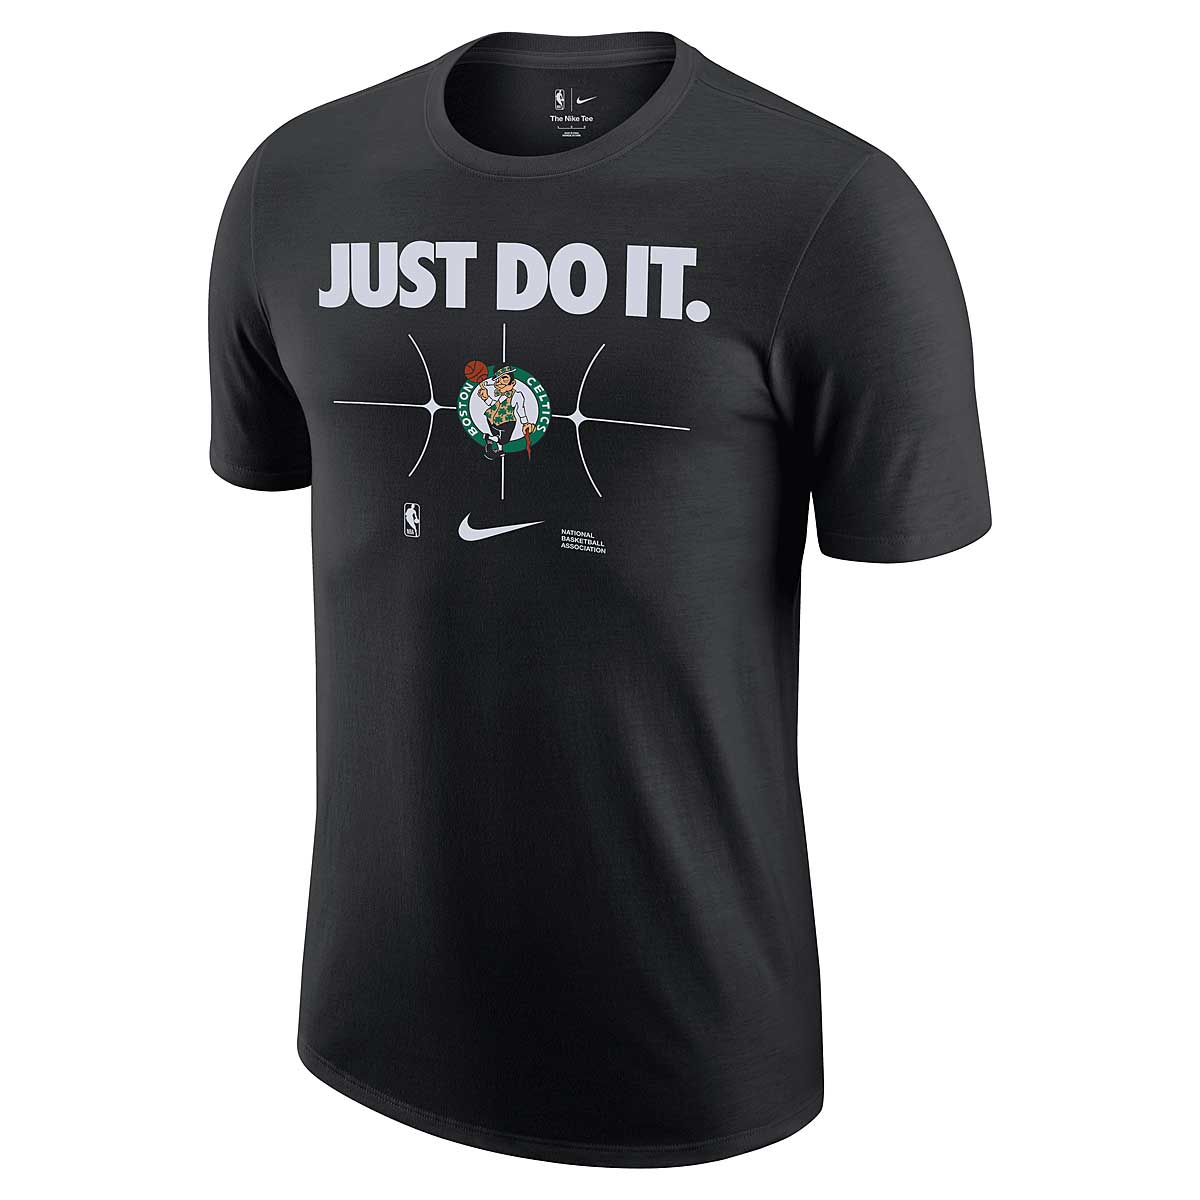 Nike NBA Boston Celtics Essential Just Do It T-shirt, Black M